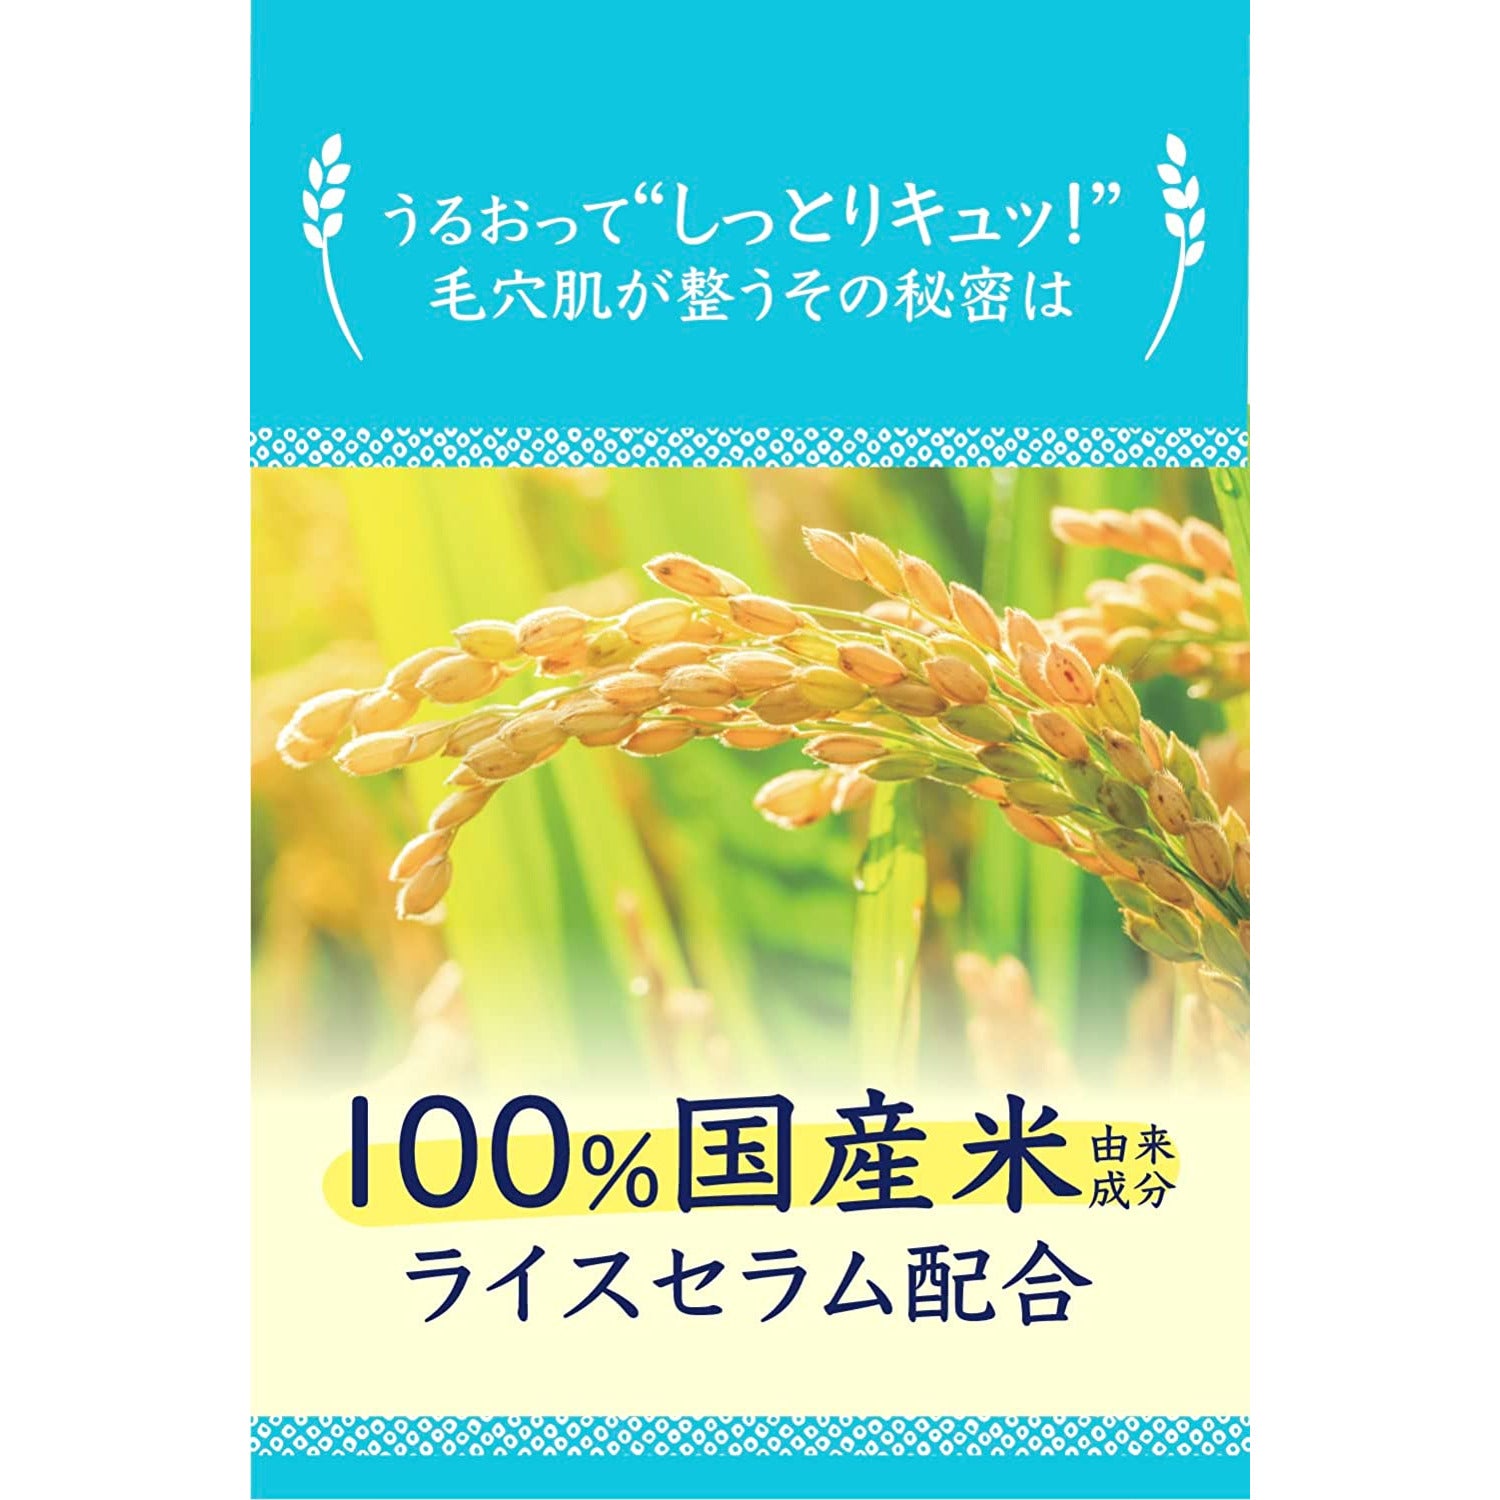 Ishizawa Lab Keana Nadeshiko Rice Pack 170g Import Japan